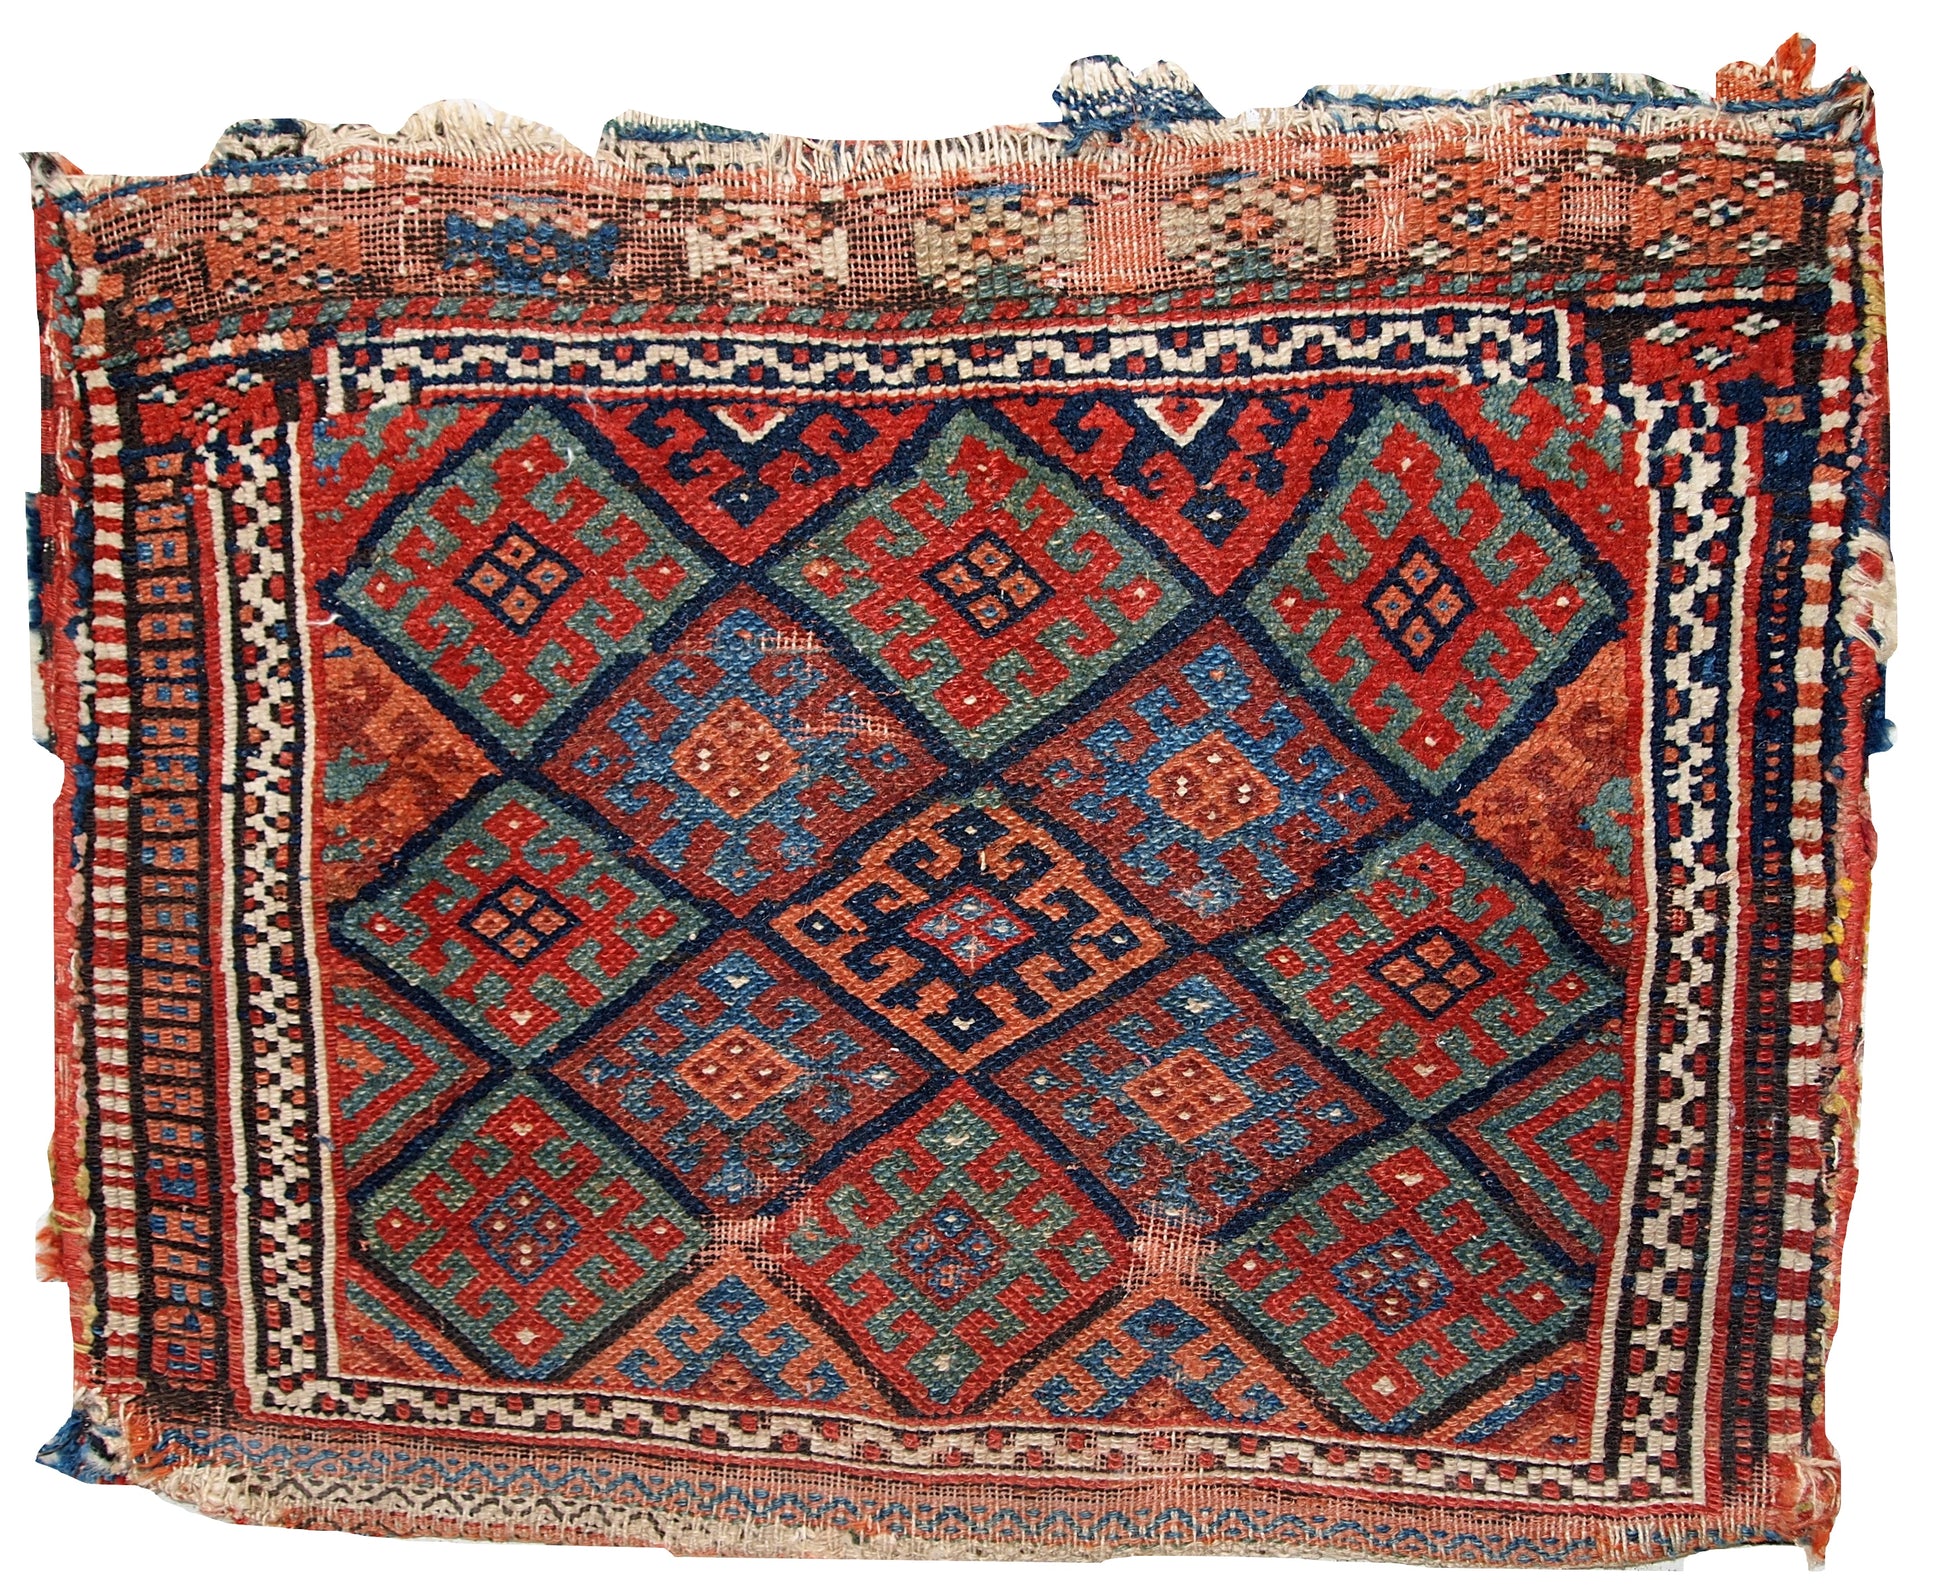 Handmade antique collectible Persian Kurdish bag, 1880s